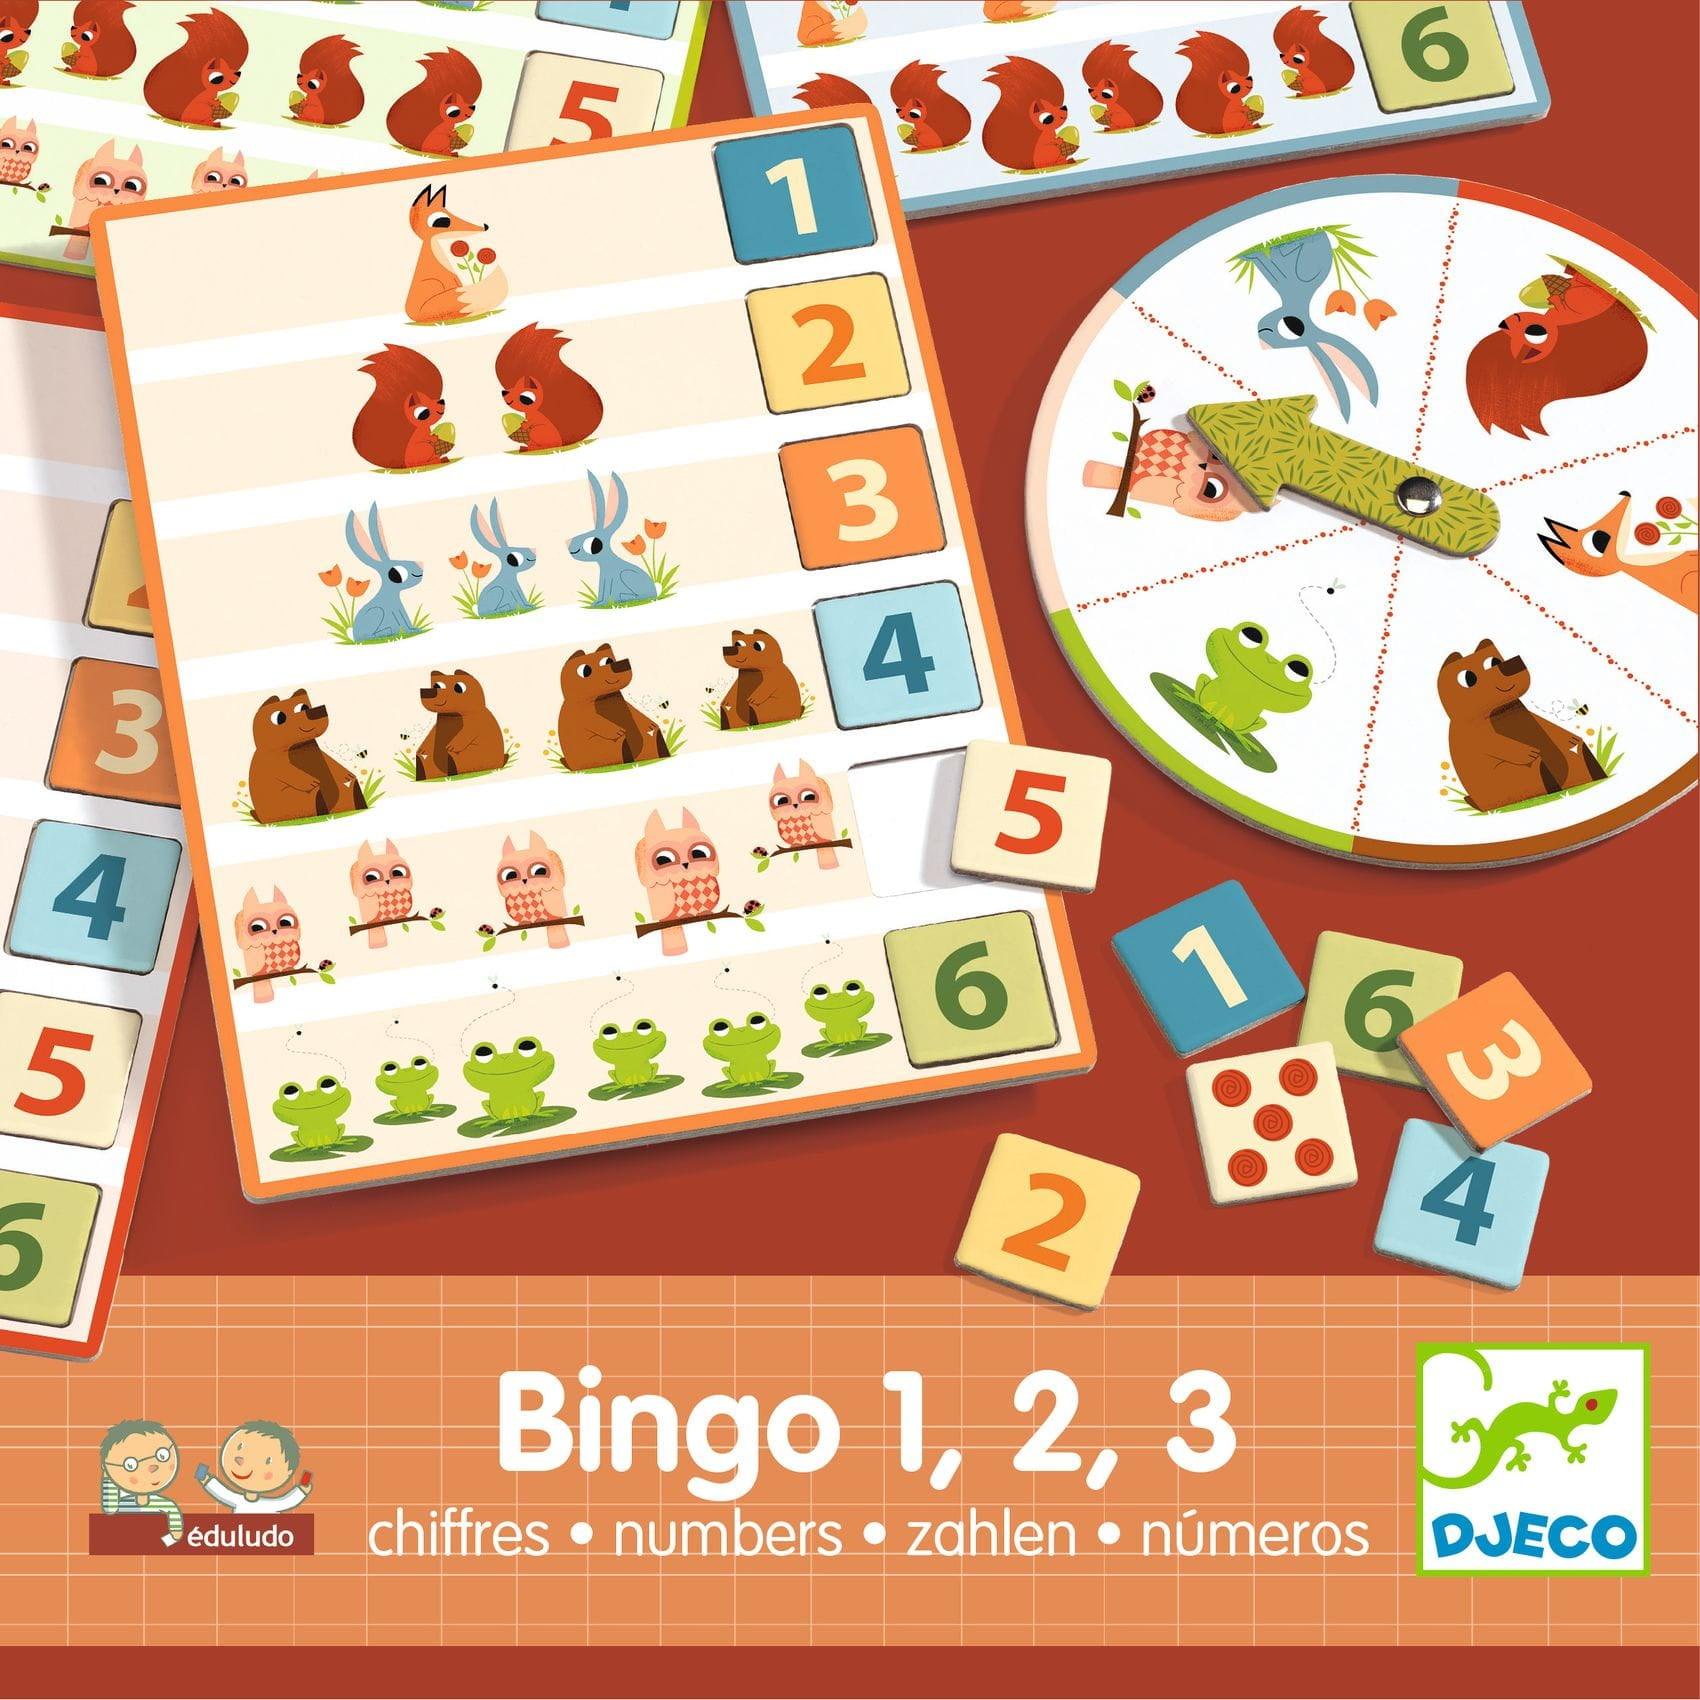 Djeco: Eduludo Bingo 1,2,3 educational game